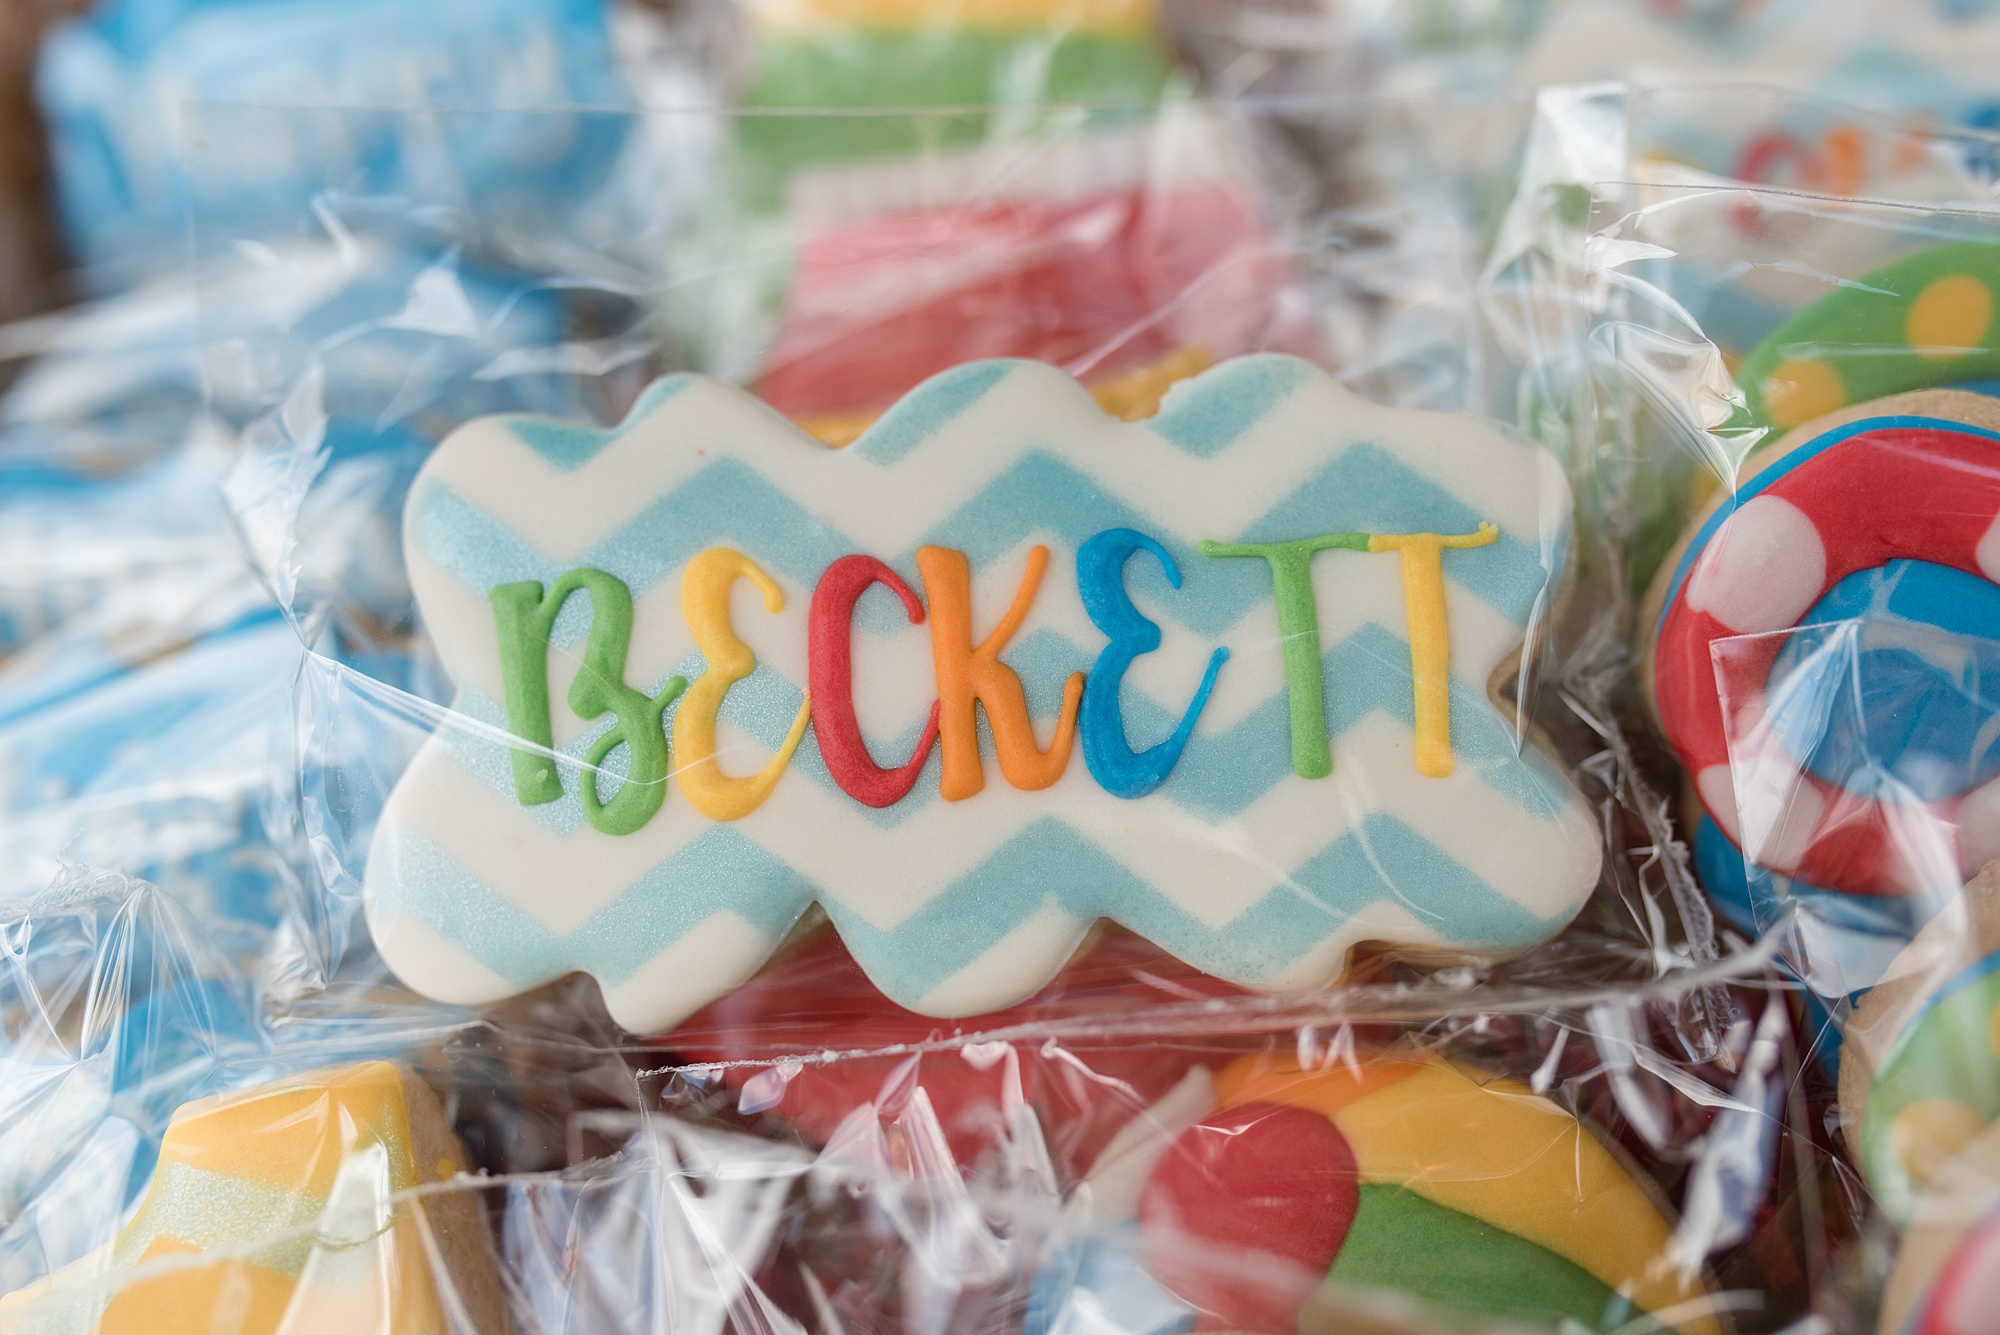 custom cookie with "Beckett" written on it